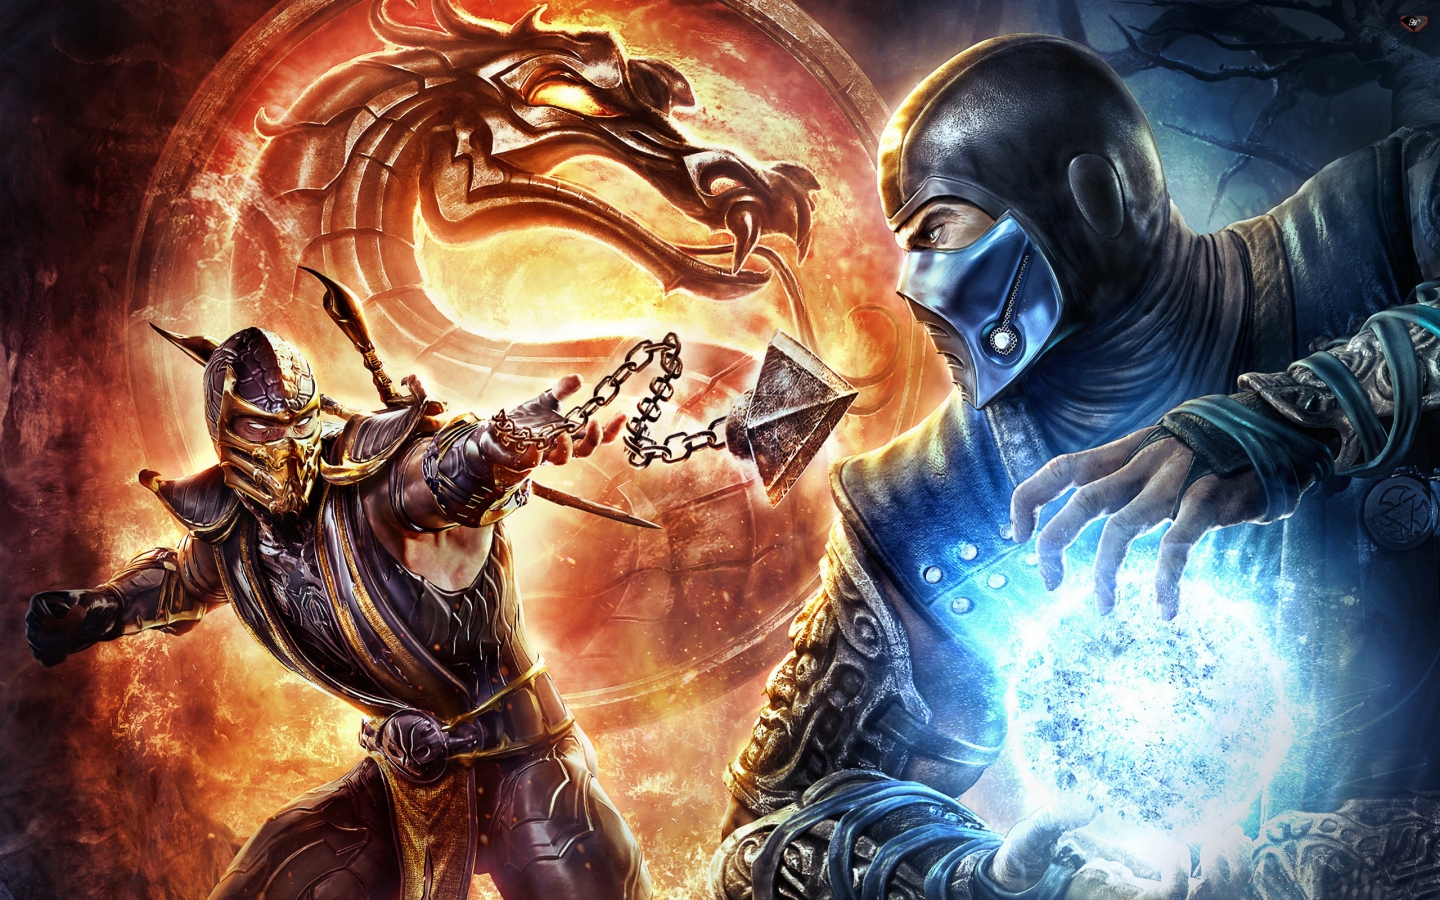 Scorpions vs Sub Zero Mortal Kombat for 1440 x 900 widescreen resolution